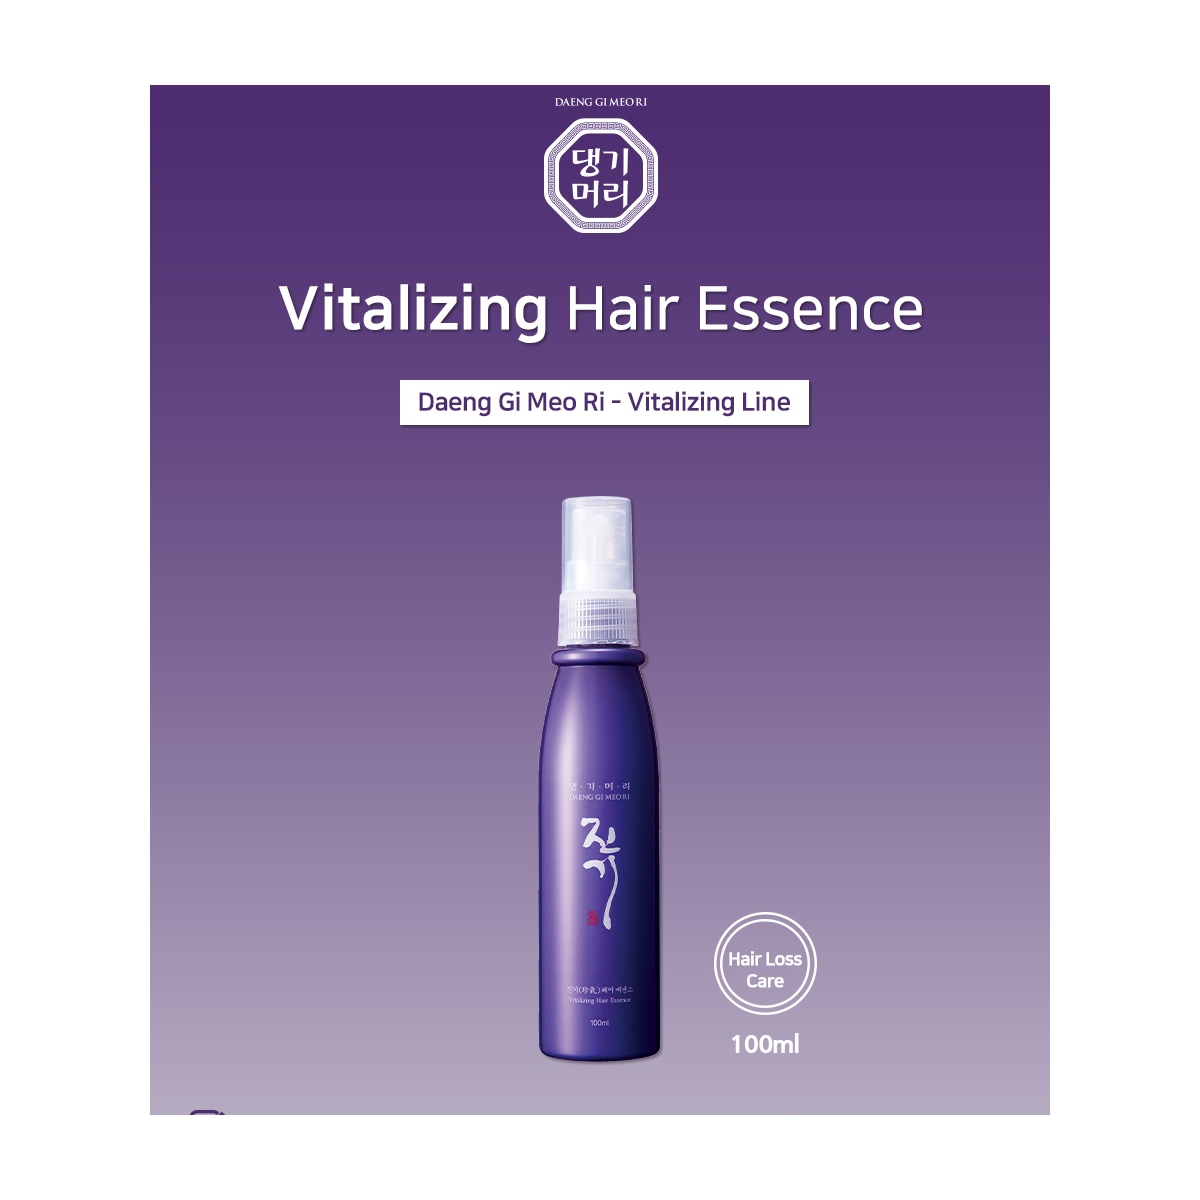 Cabello al mejor precio: Serum hidratante para pelo Doori Vitalizing Hair Essence 100ml de Daeng Gi Meo Ri en Skin Thinks - 